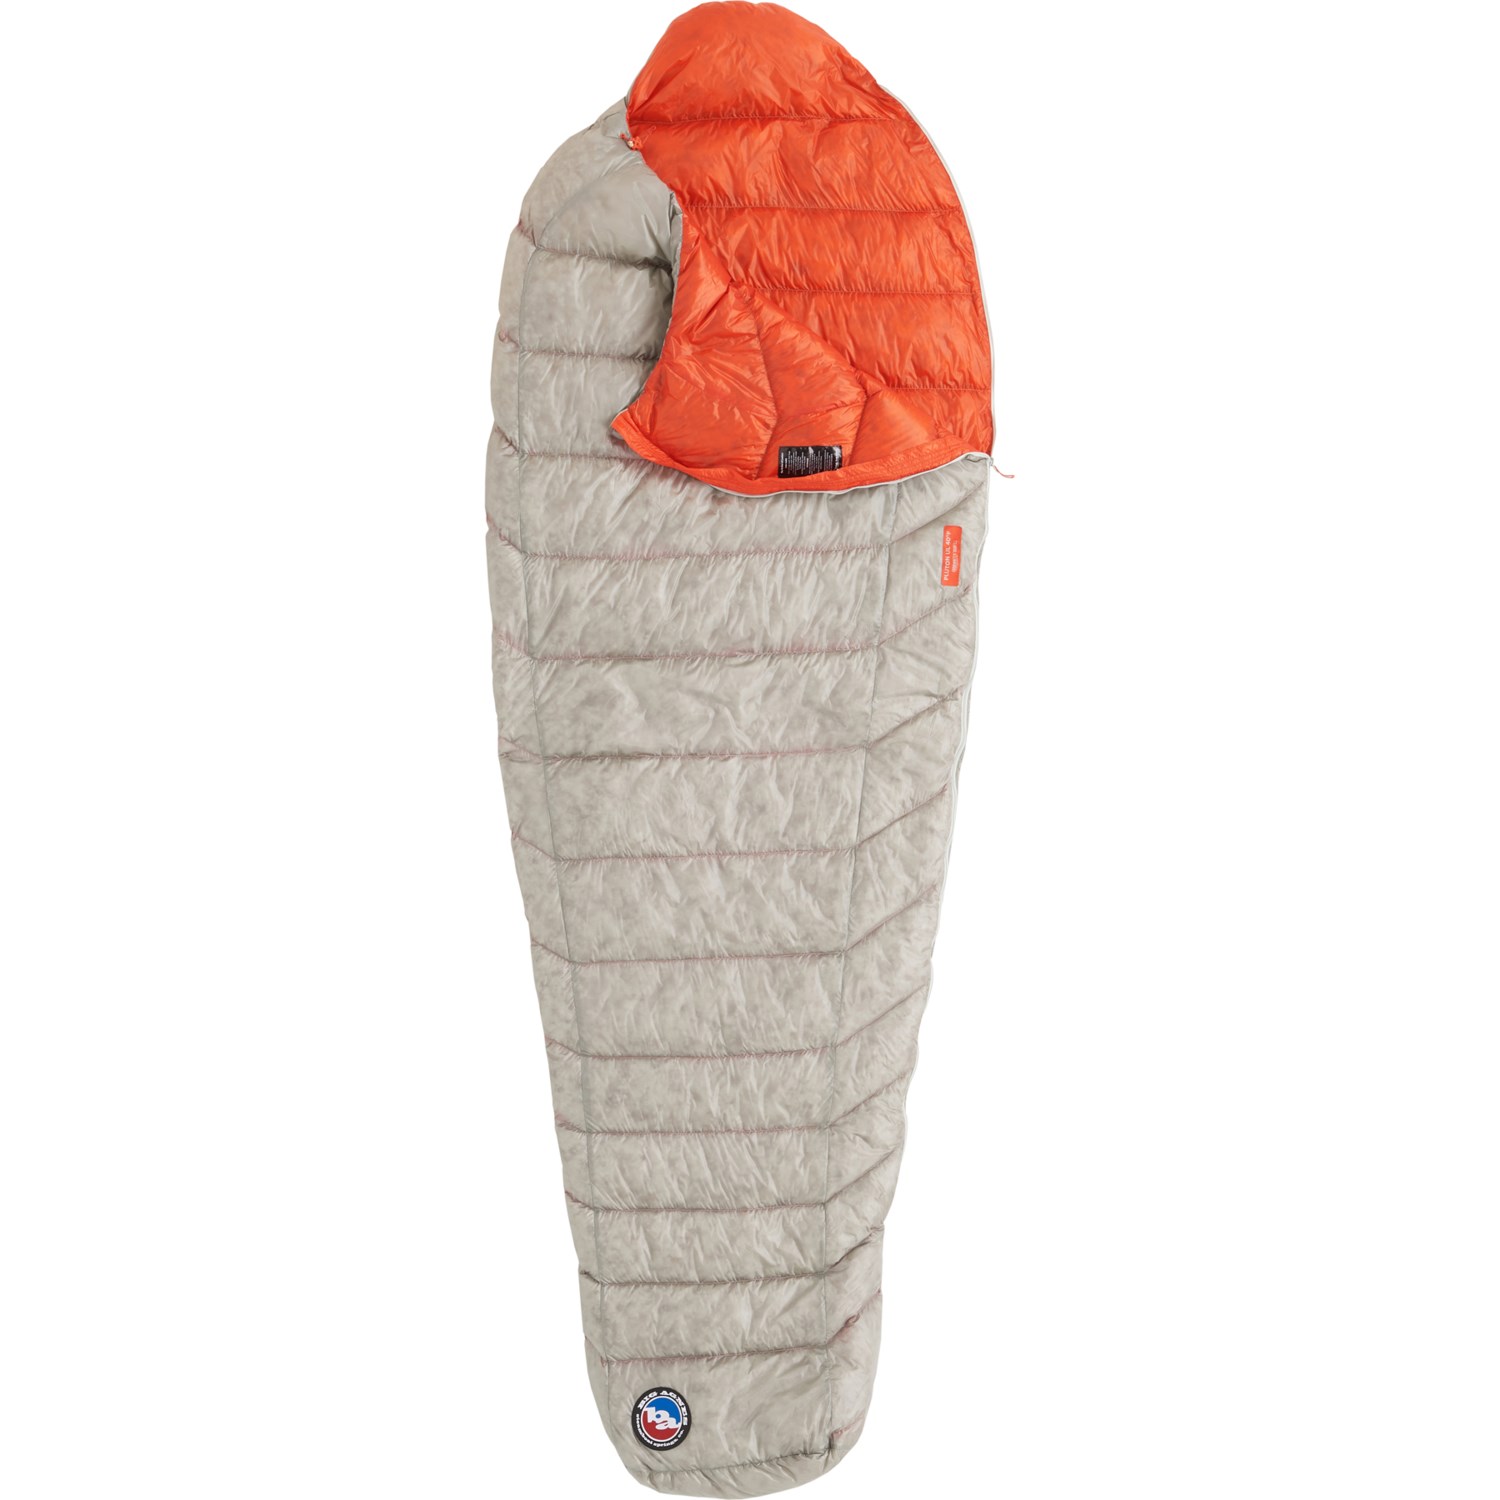 Big Agnes 40°F Pluton Ultralight Sleeping Bag - Mummy - Save 27%